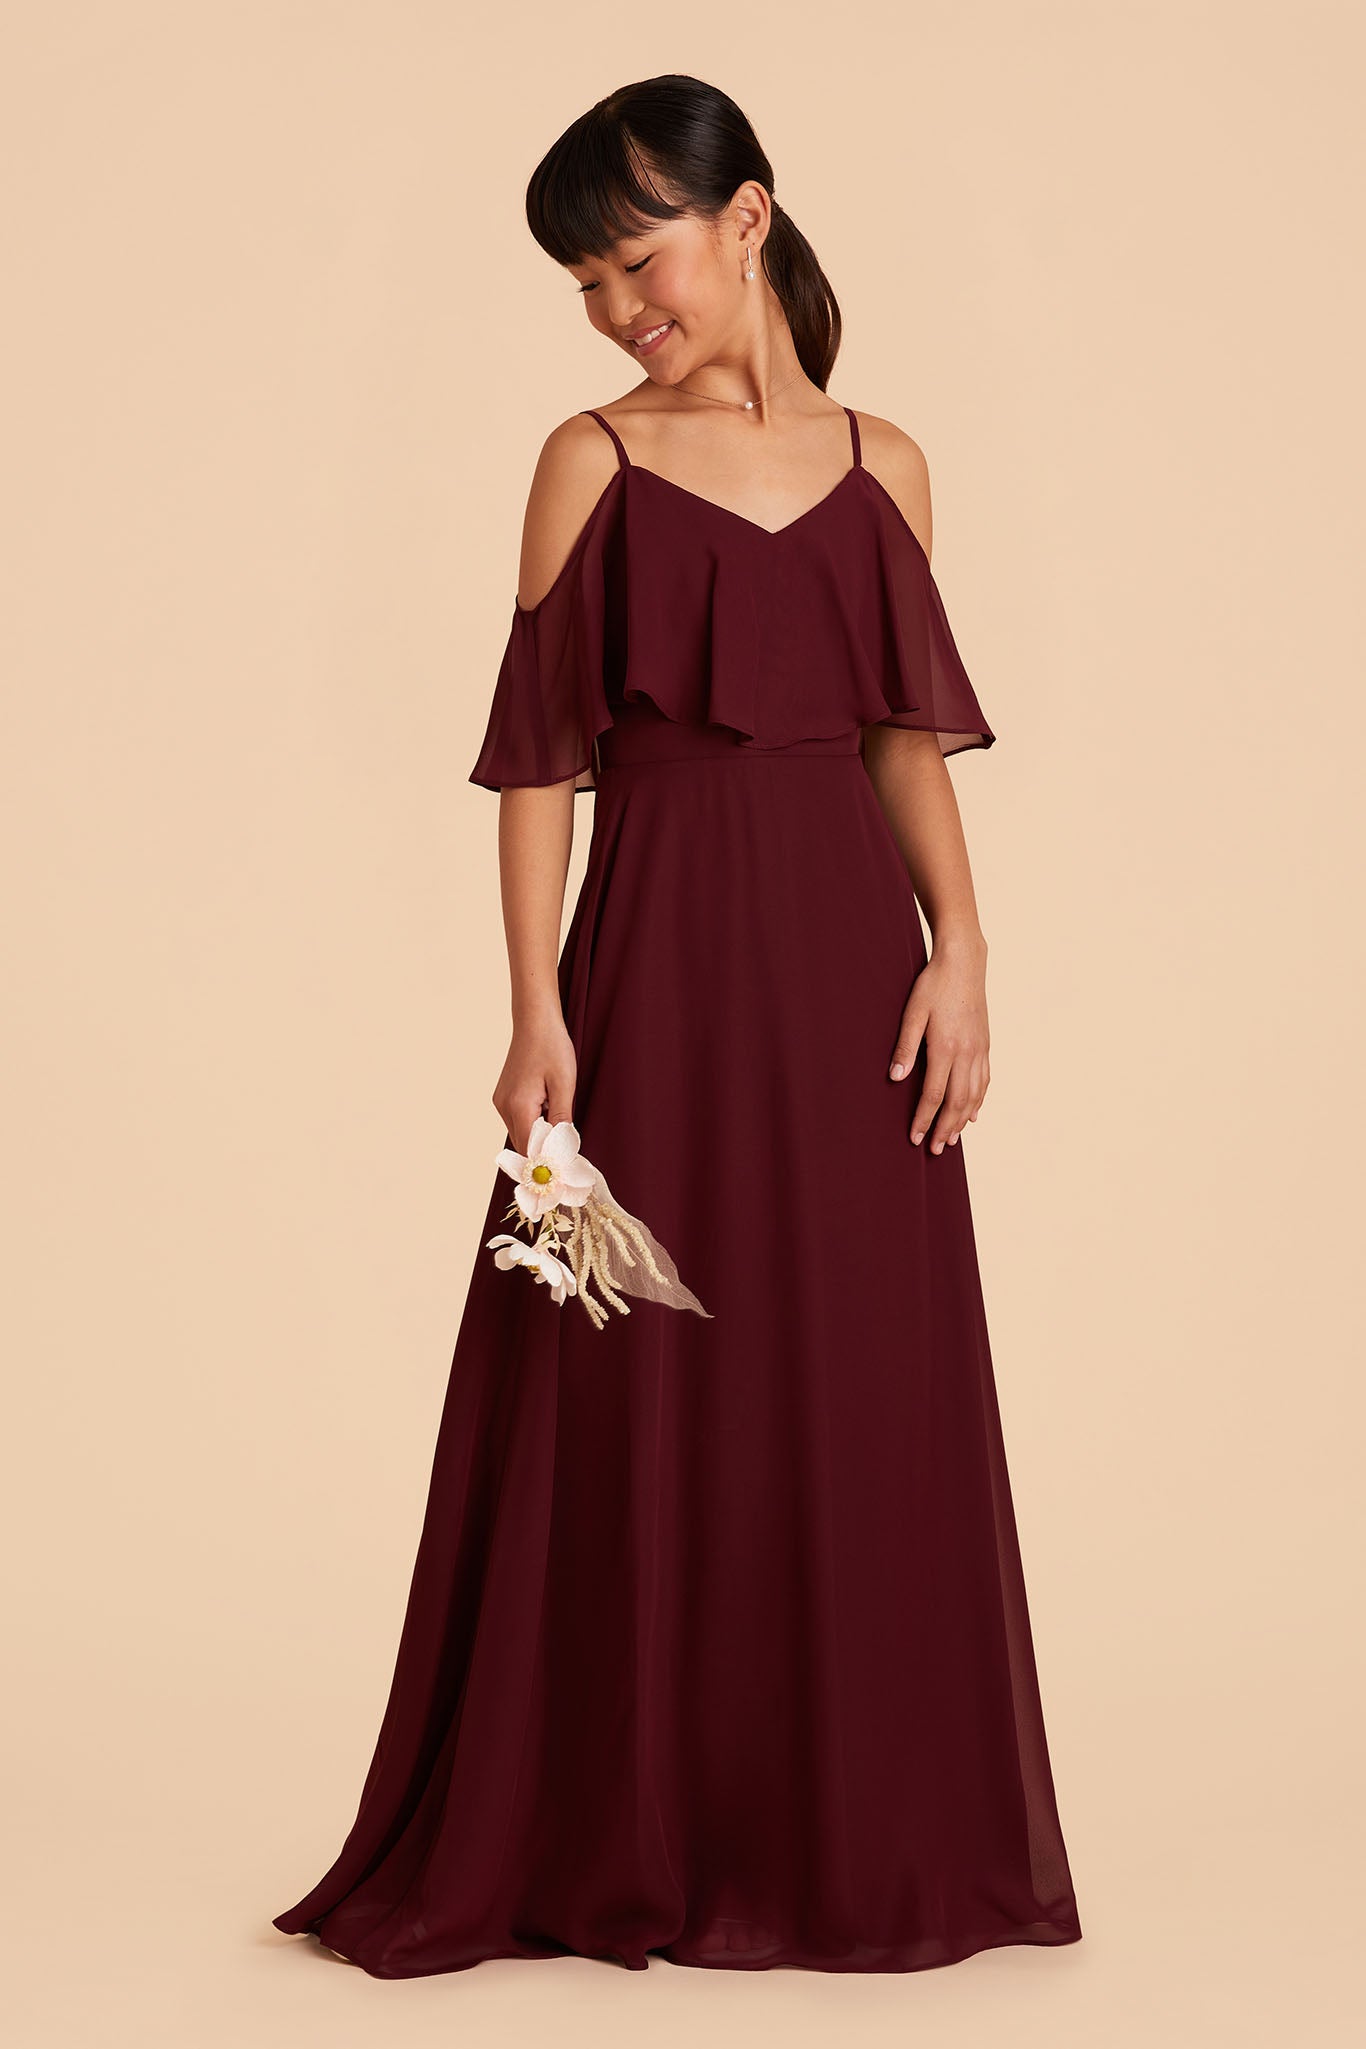 cold shoulder cabernet dark red convertible floor length junior bridesmaid dress with ruffles